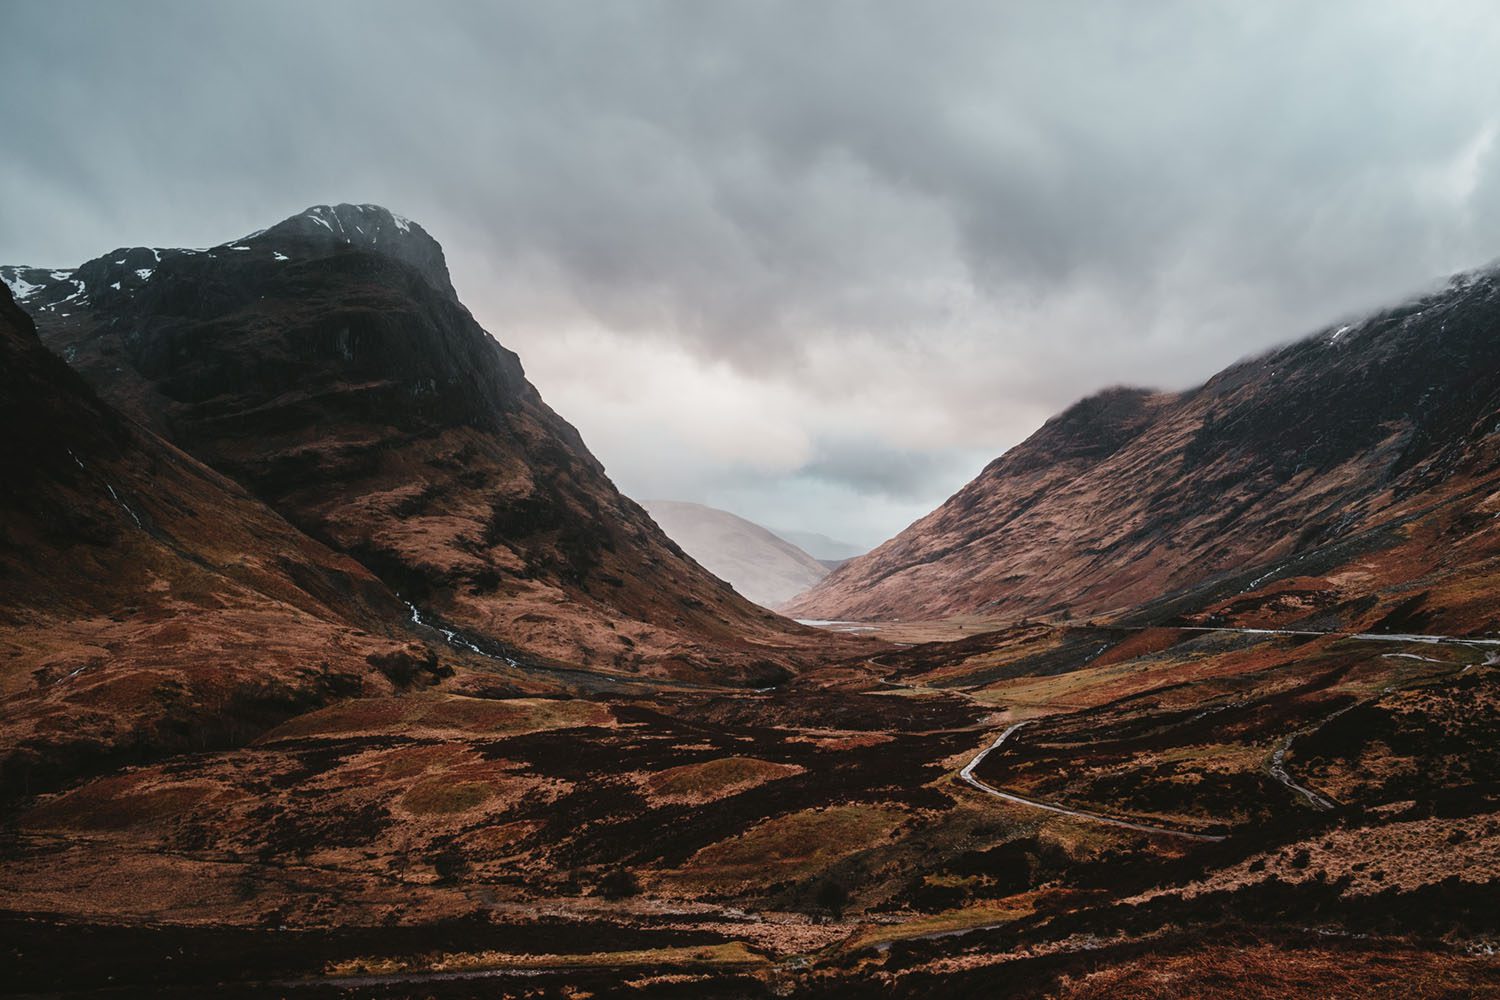 The Highlands of Scotland